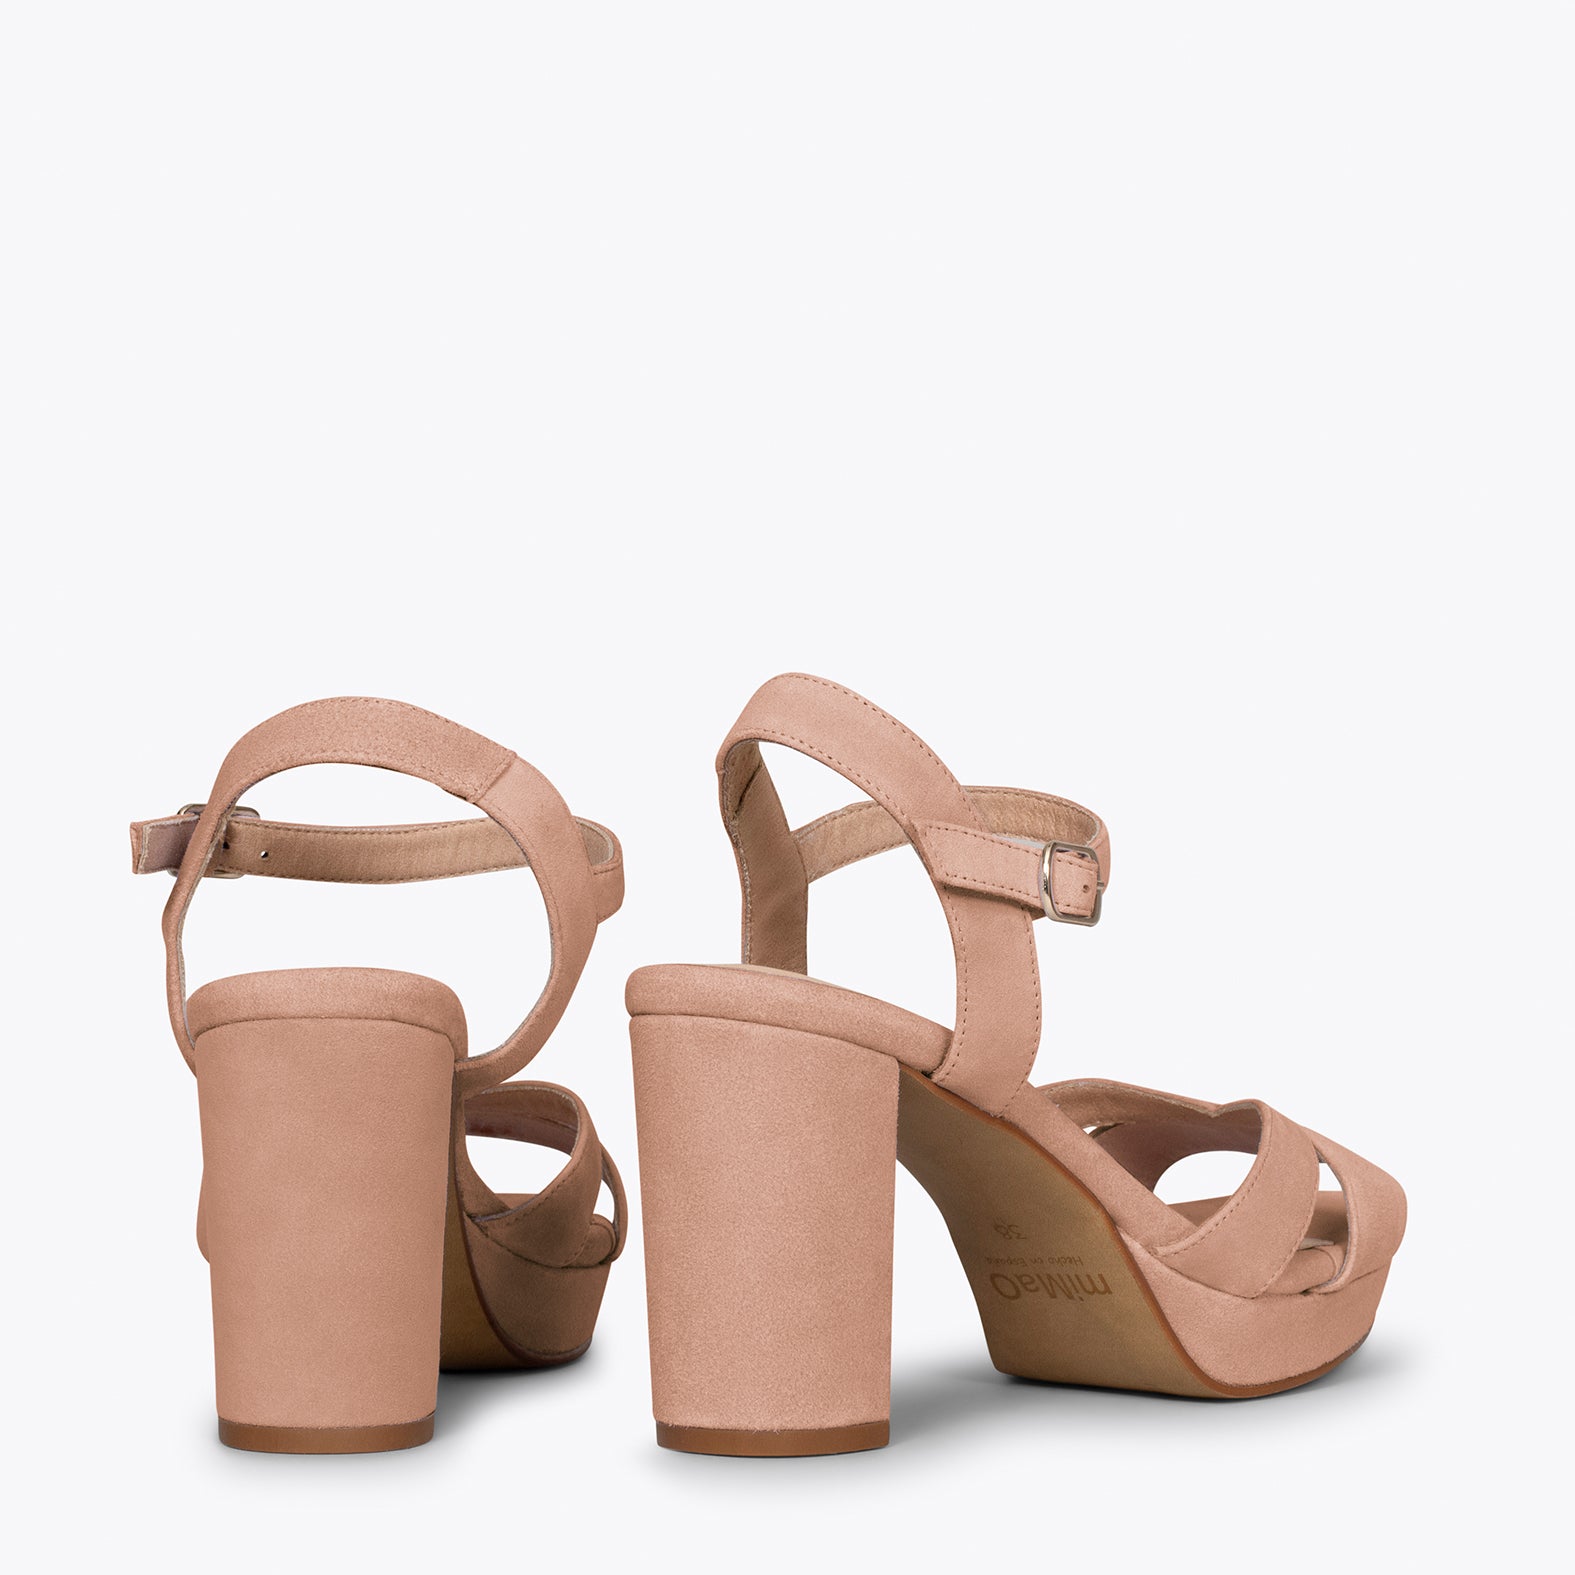 PARIS – NUDE high heel sandal with platform